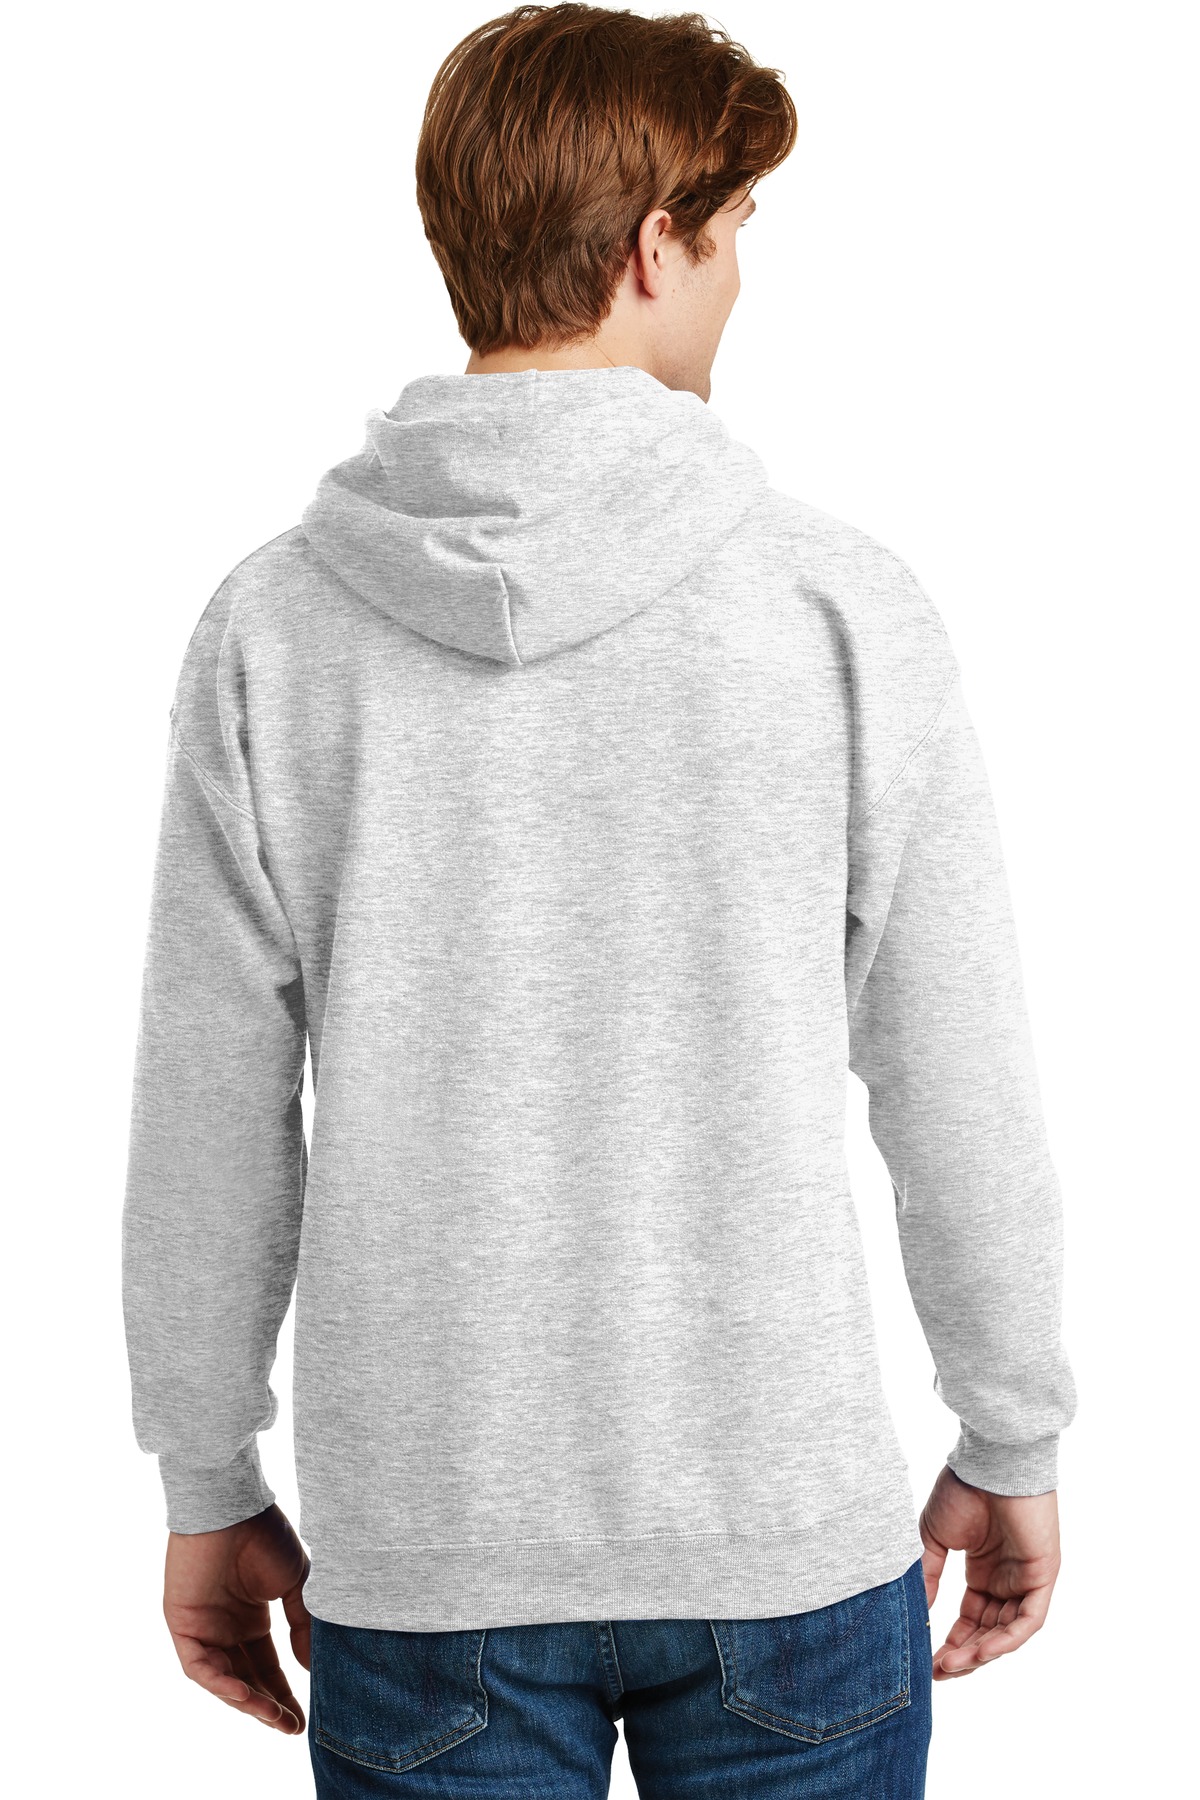 Hanes ® Ultimate Cotton ® - Pullover Hooded Sweatshirt. F170 - Custom ...